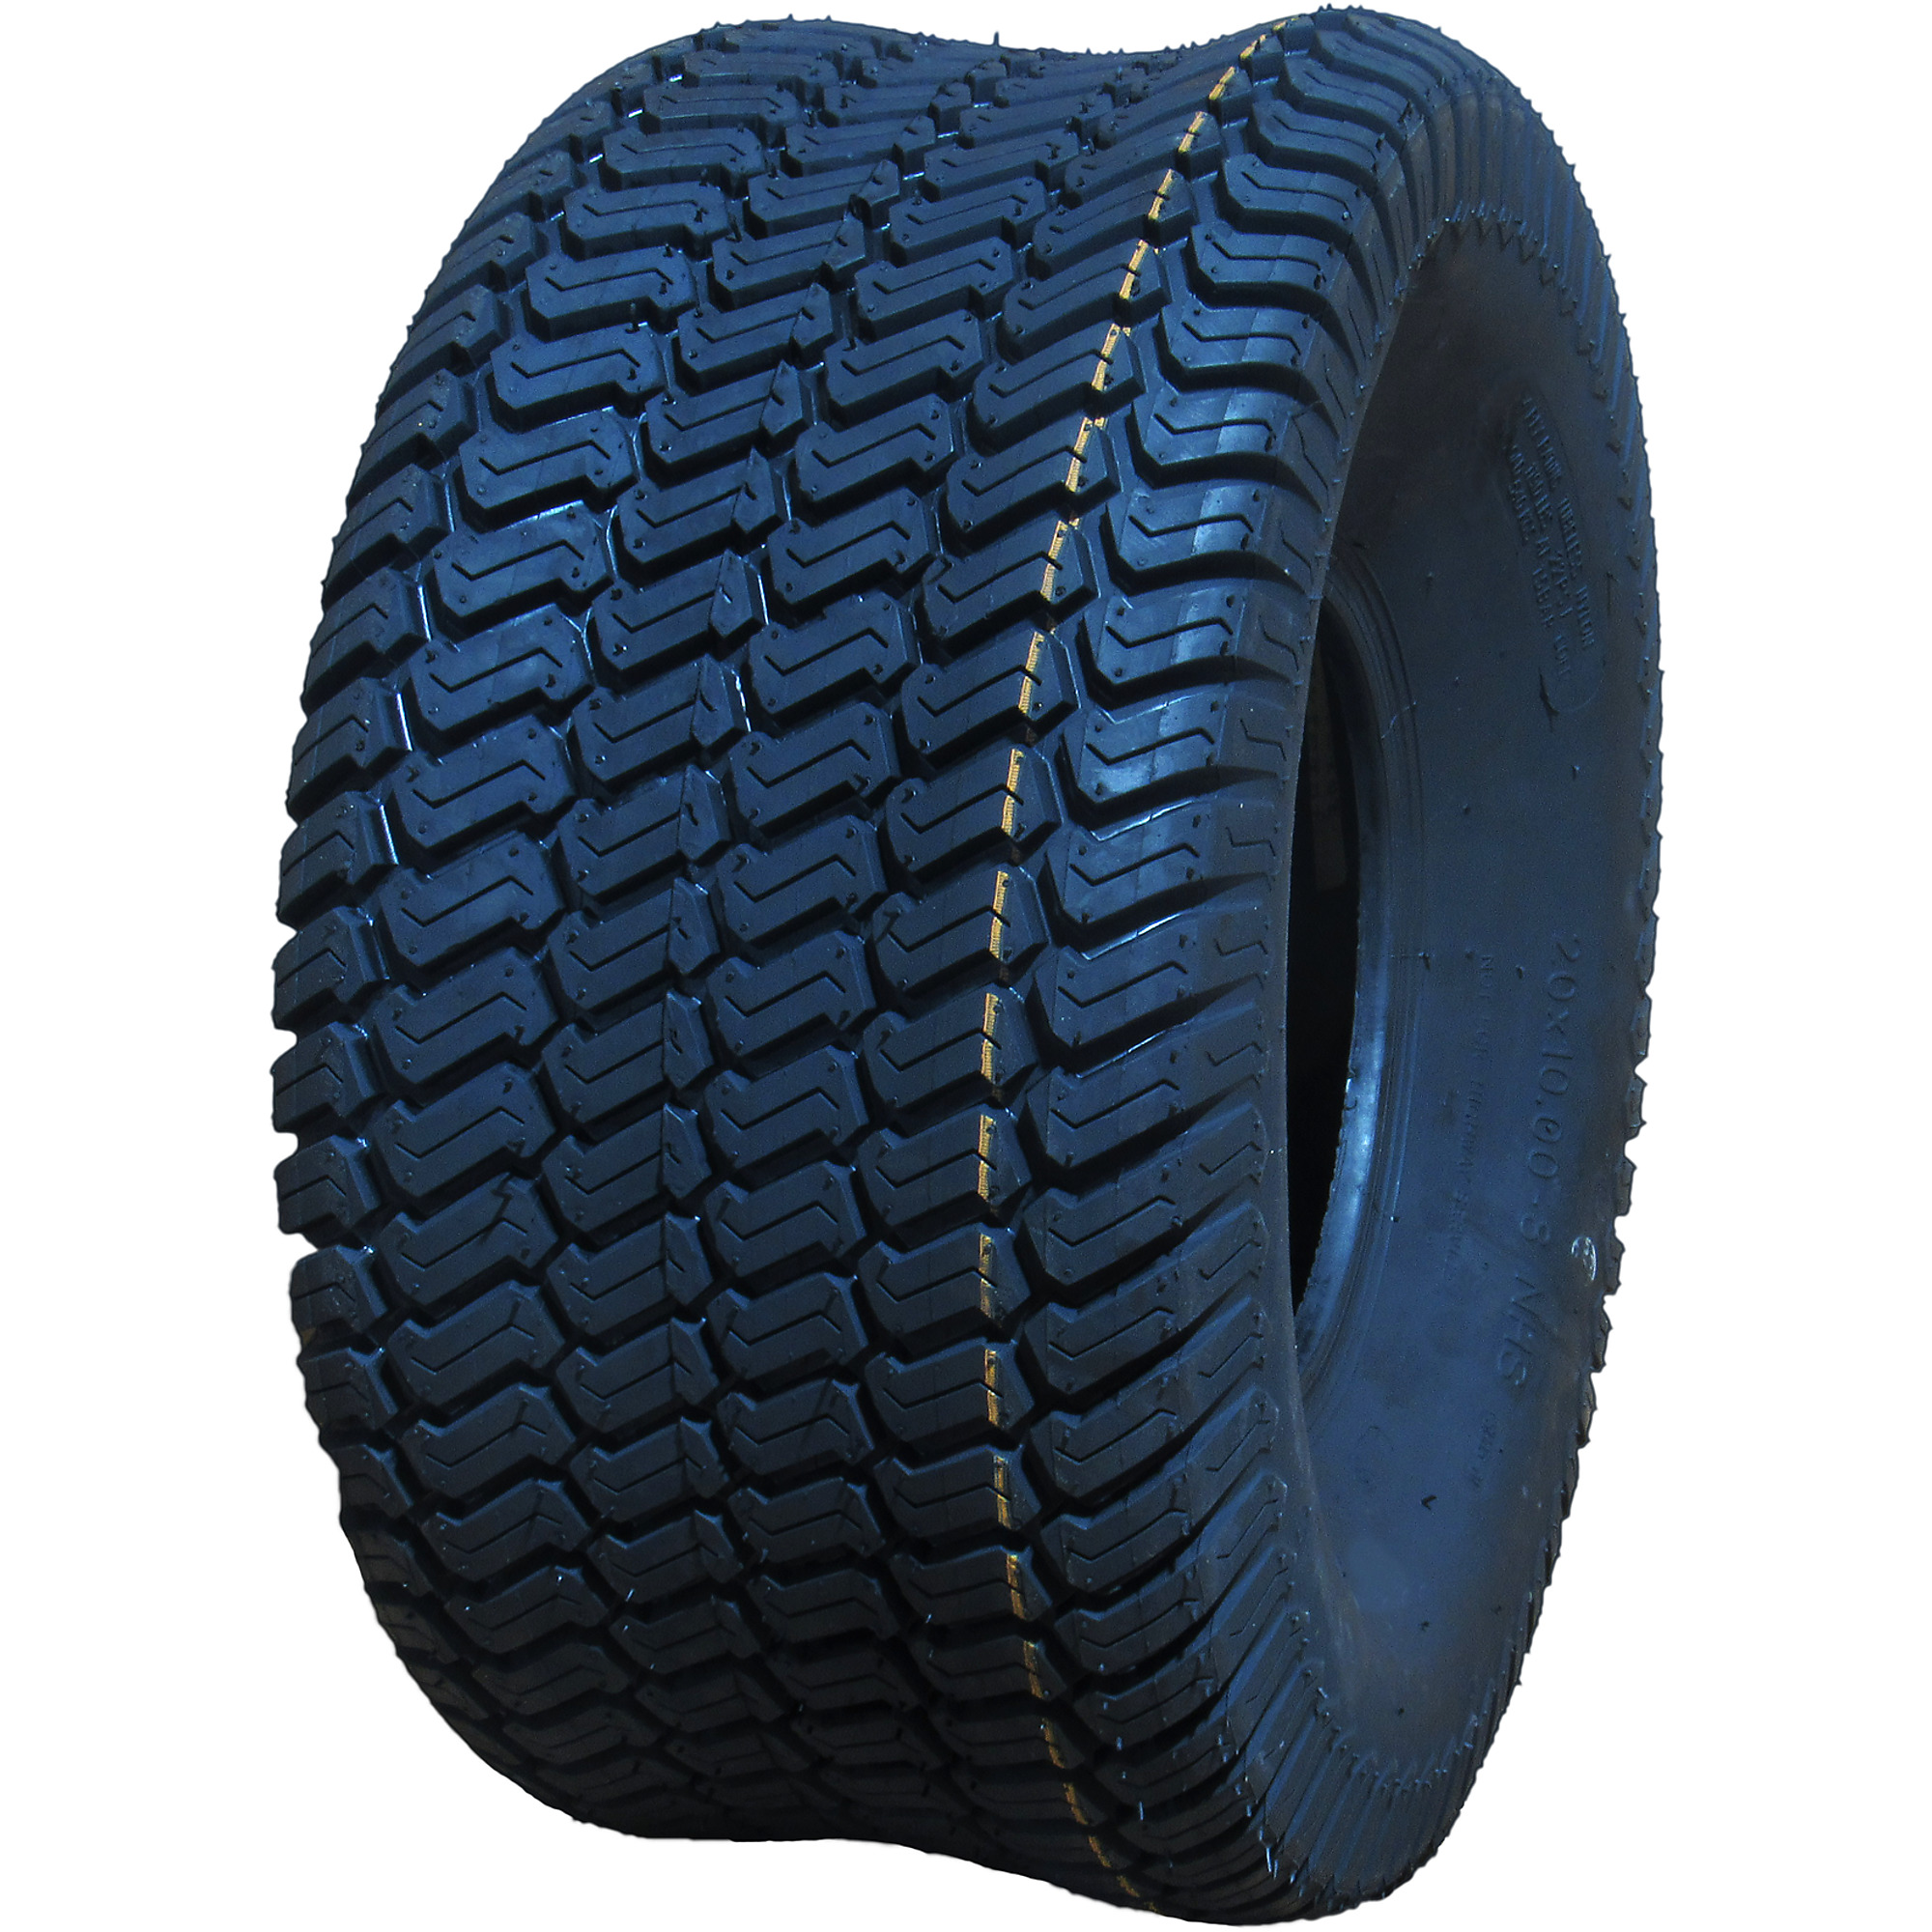 HI-RUN, Lawn Garden Tire, SU05 Turf, Tire Size 20X10.00-8 Load Range Rating B, Model WD1138